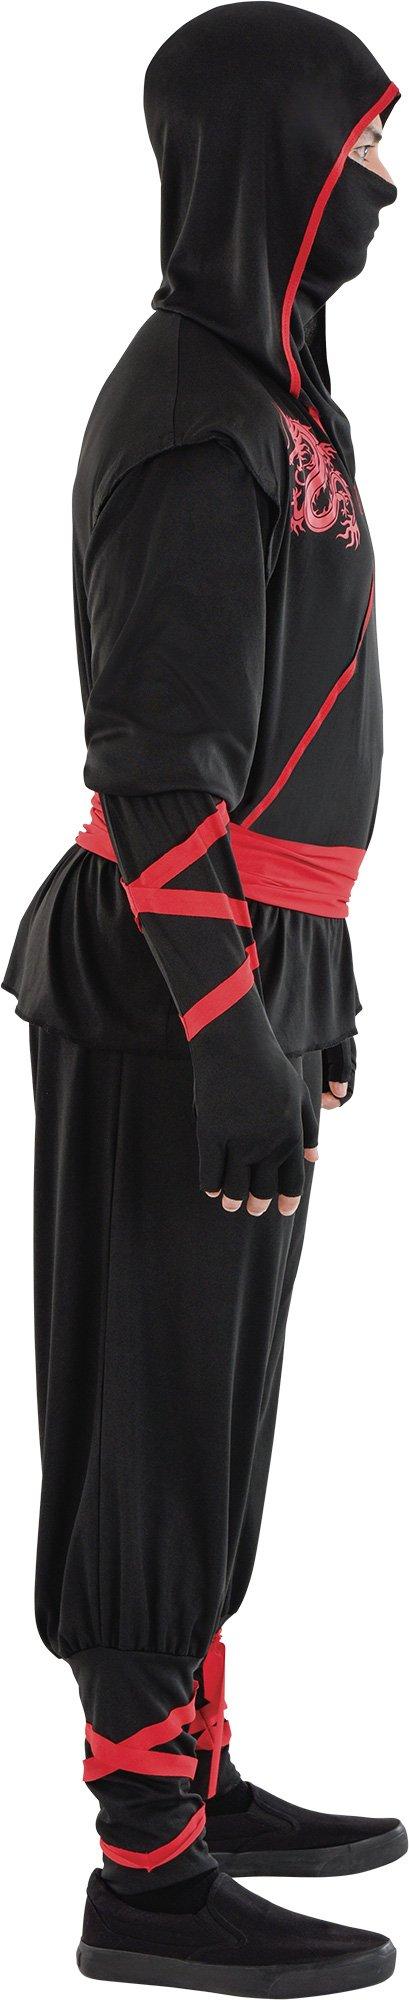 Men's Ninja Assassin Costume